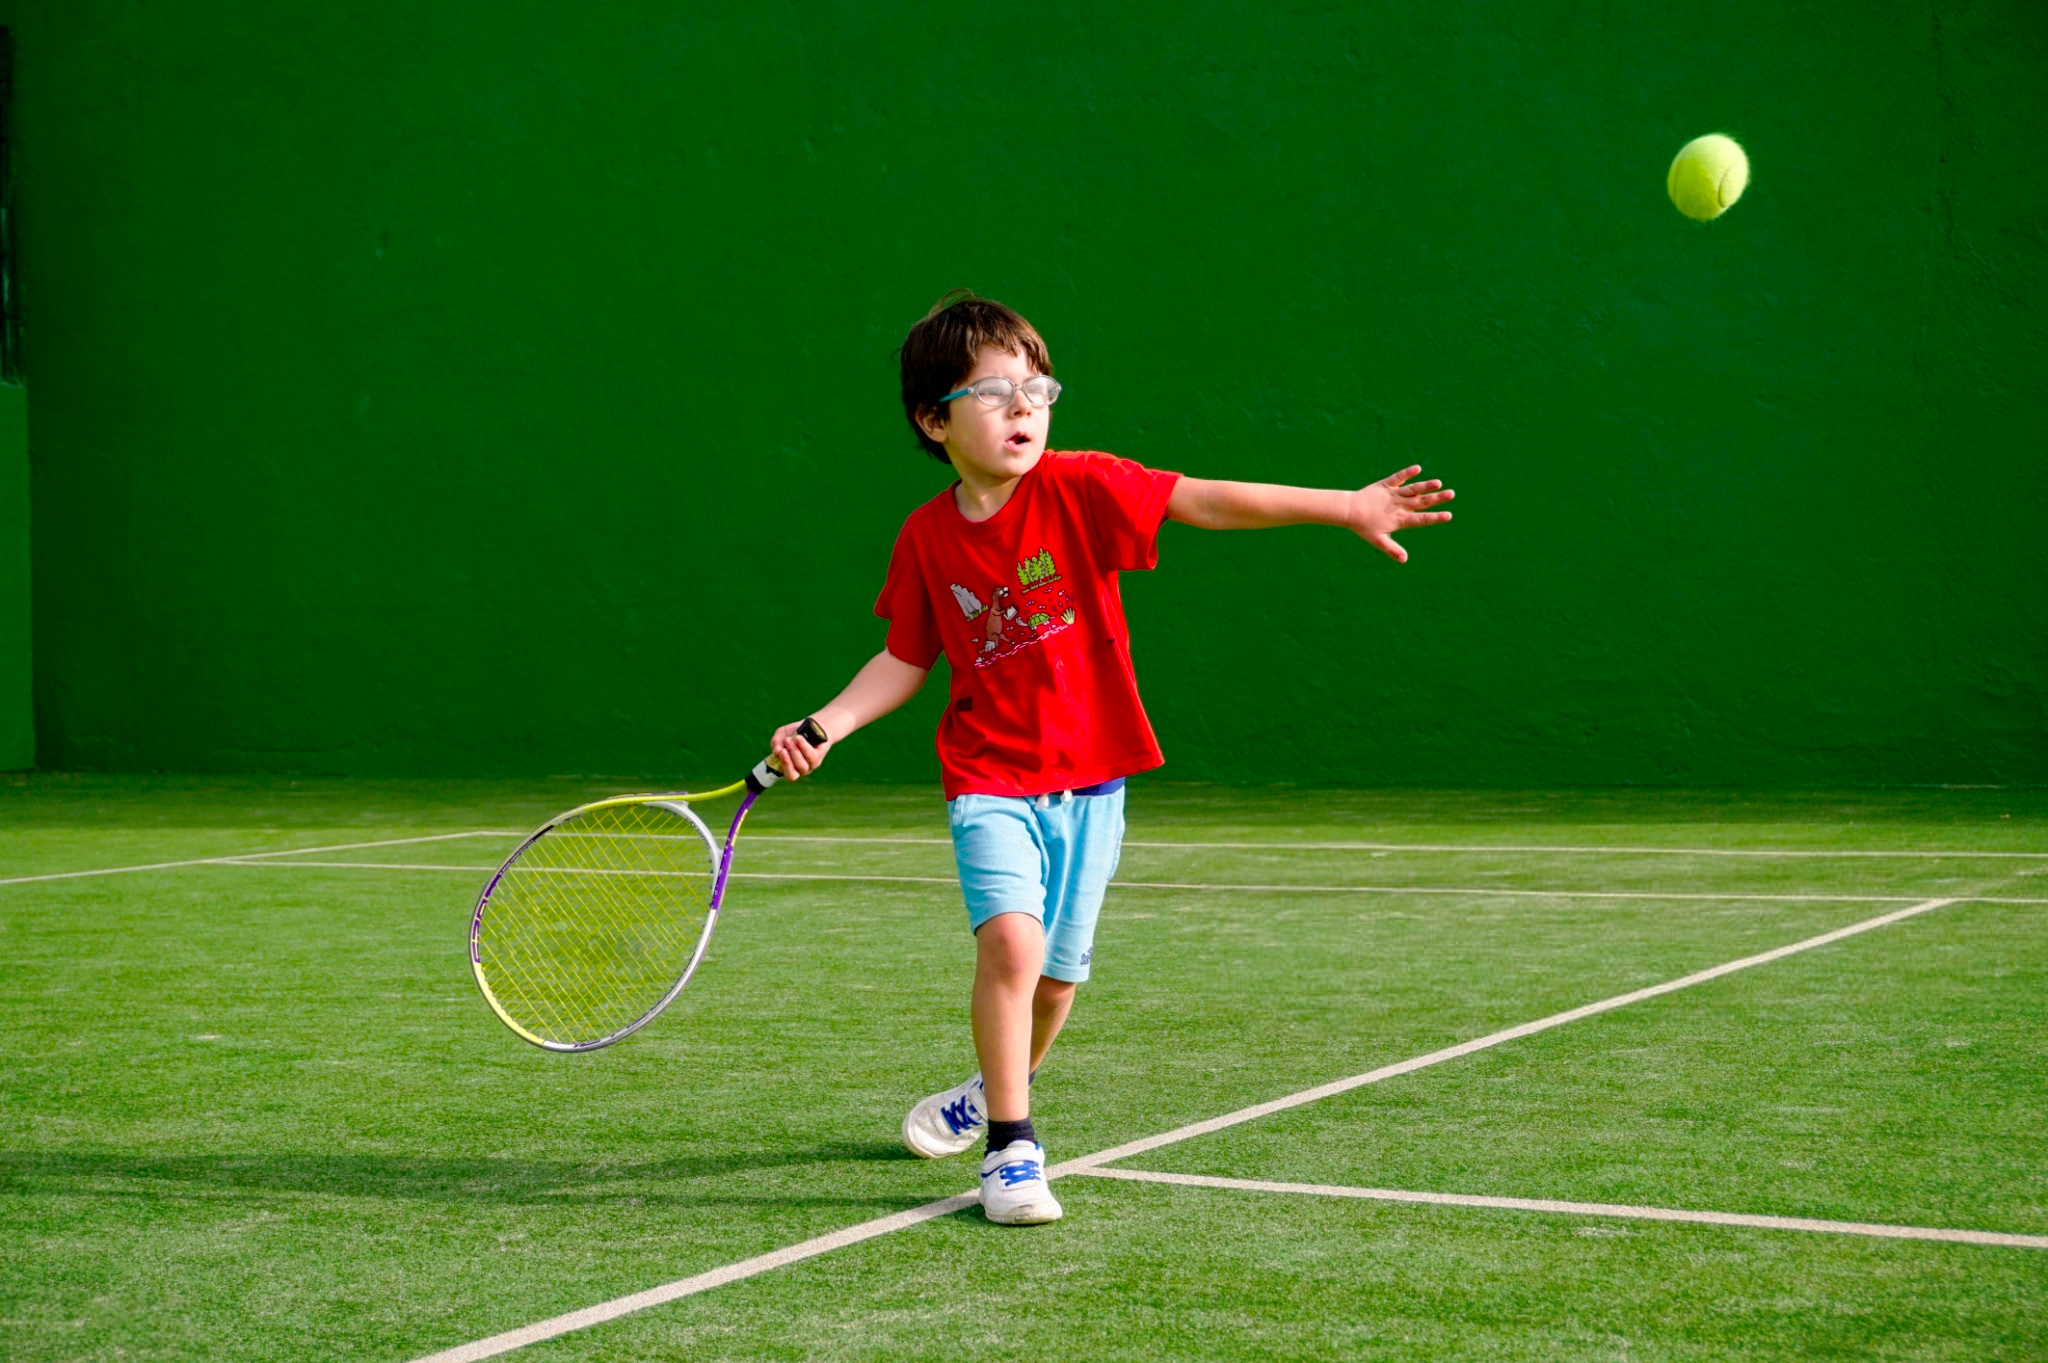 You can play tennis your. Теннис дети. Дети играют в теннис. Мальчик теннис. Маленький теннис.